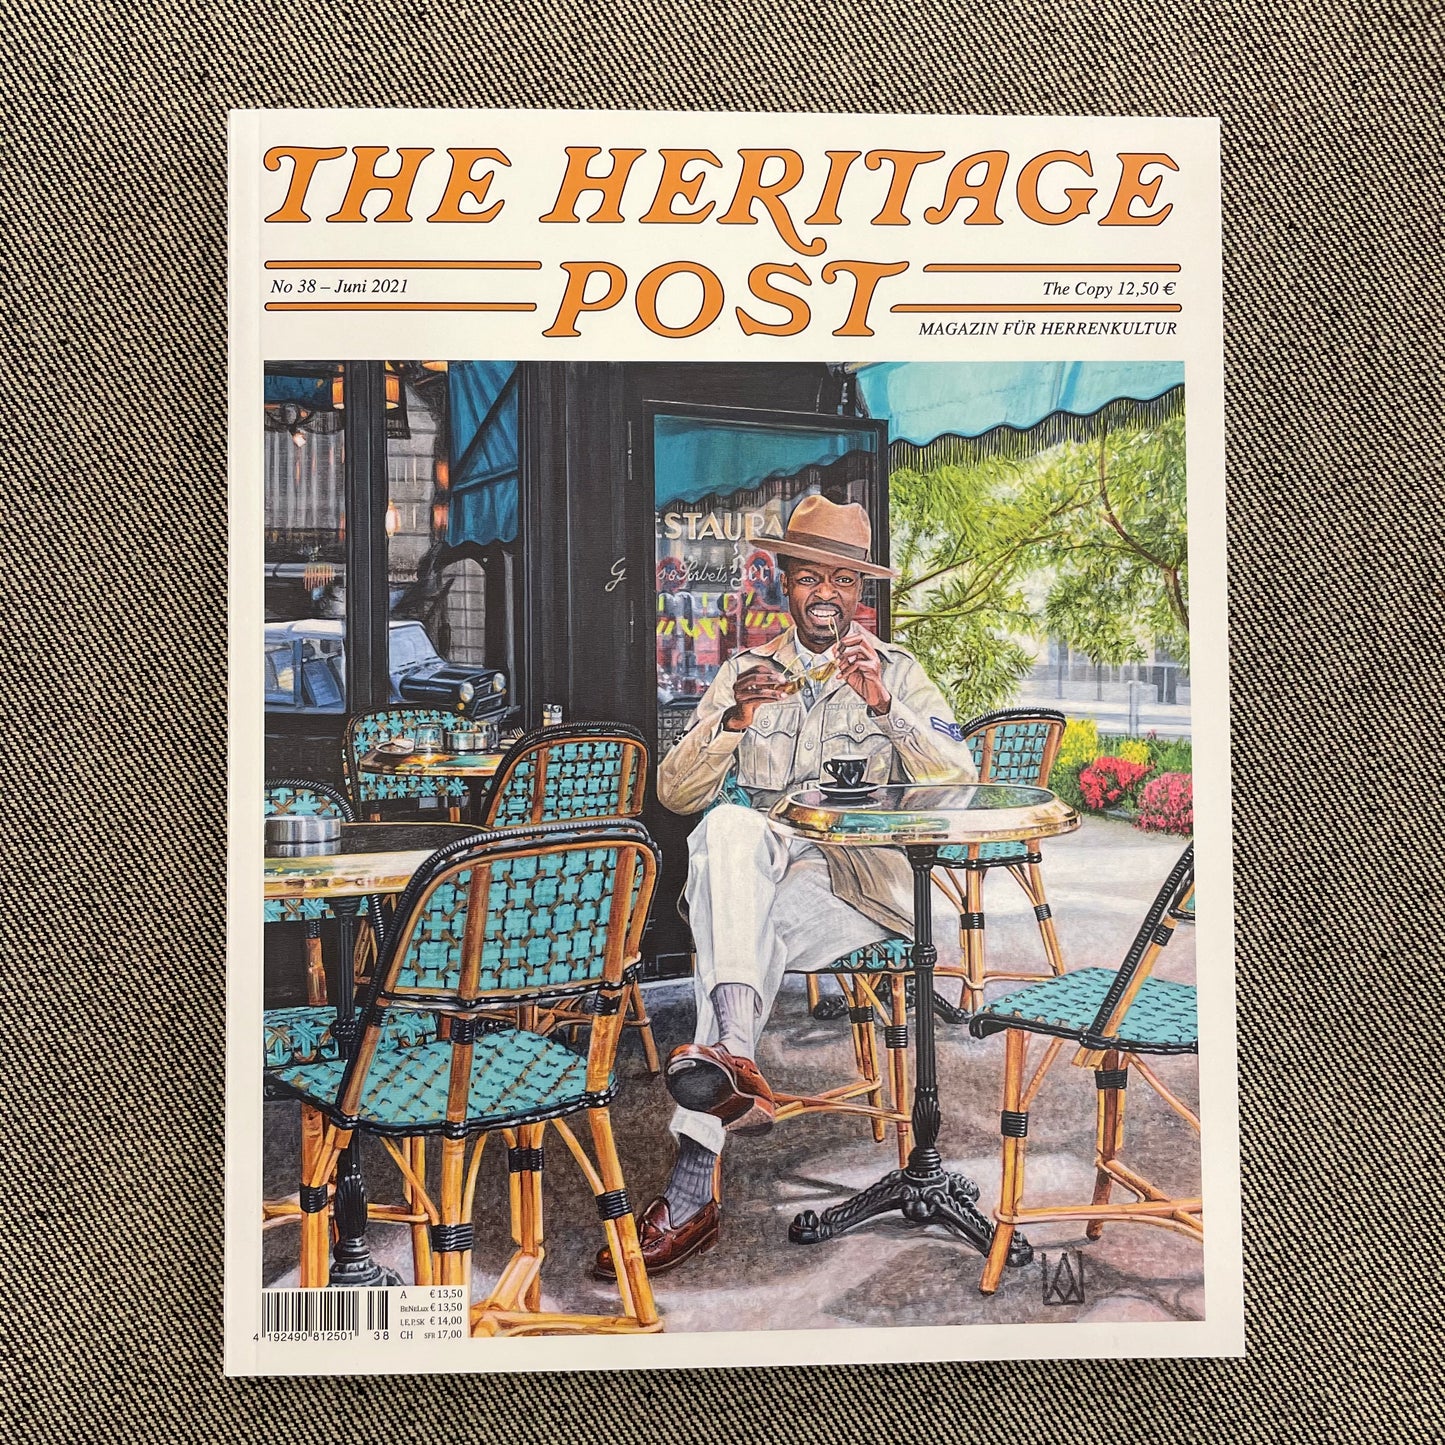 The Heritage Post - vol 38